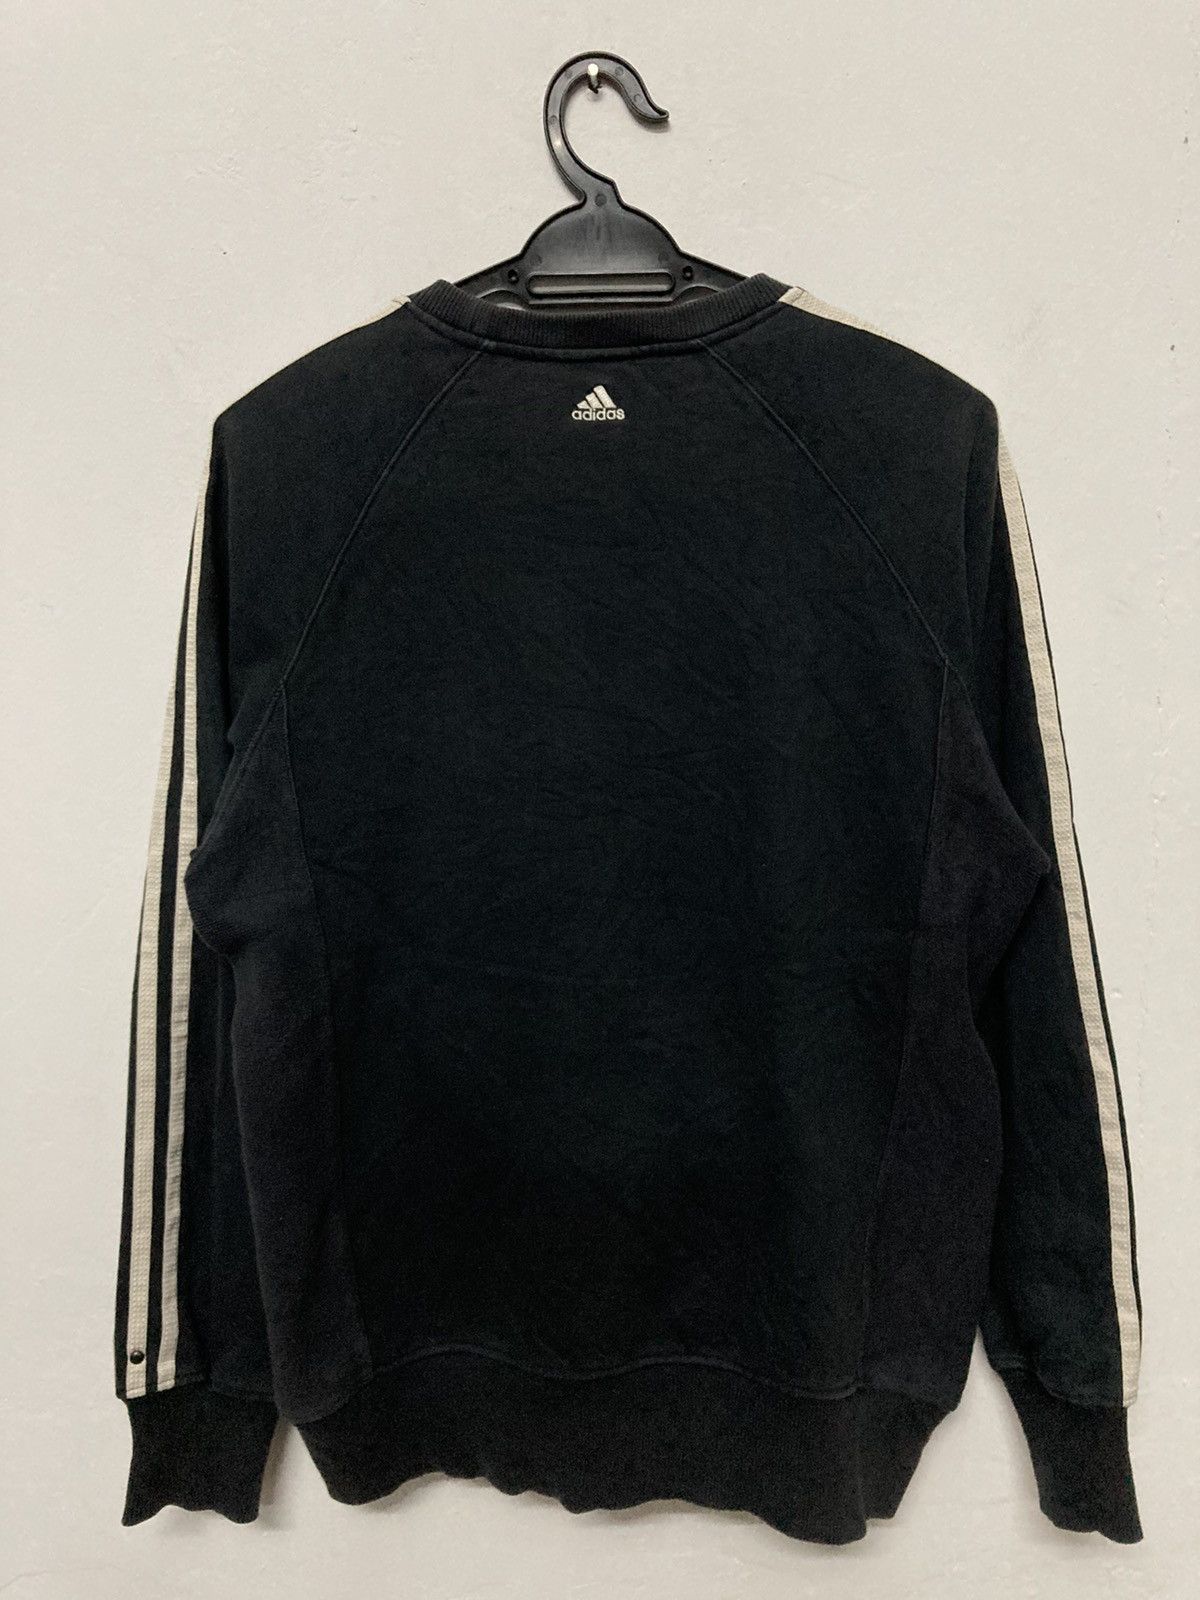 Adidas Adi Dassler Signature Crewneck Sweatshirt - 2